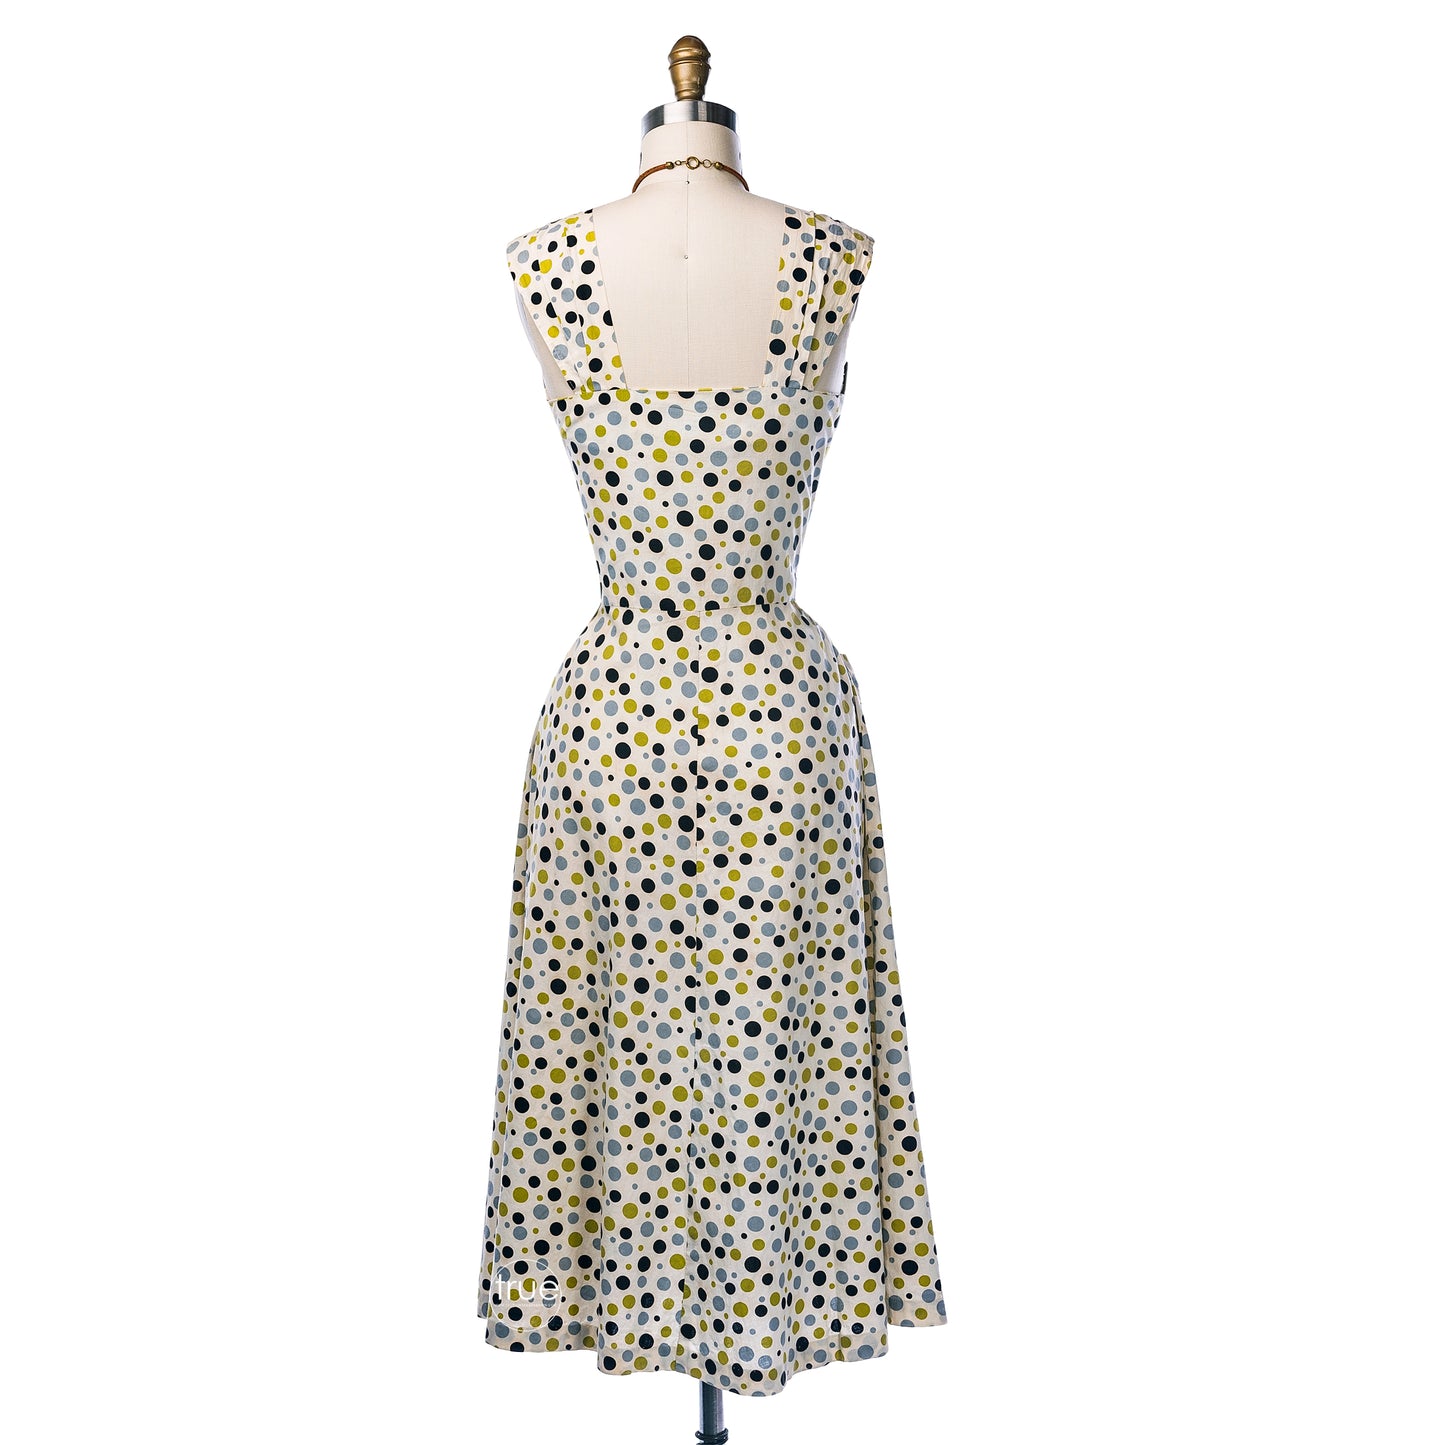 vintage 1930's dress ...fun cotton polka dot sundress and bolero jacket dress